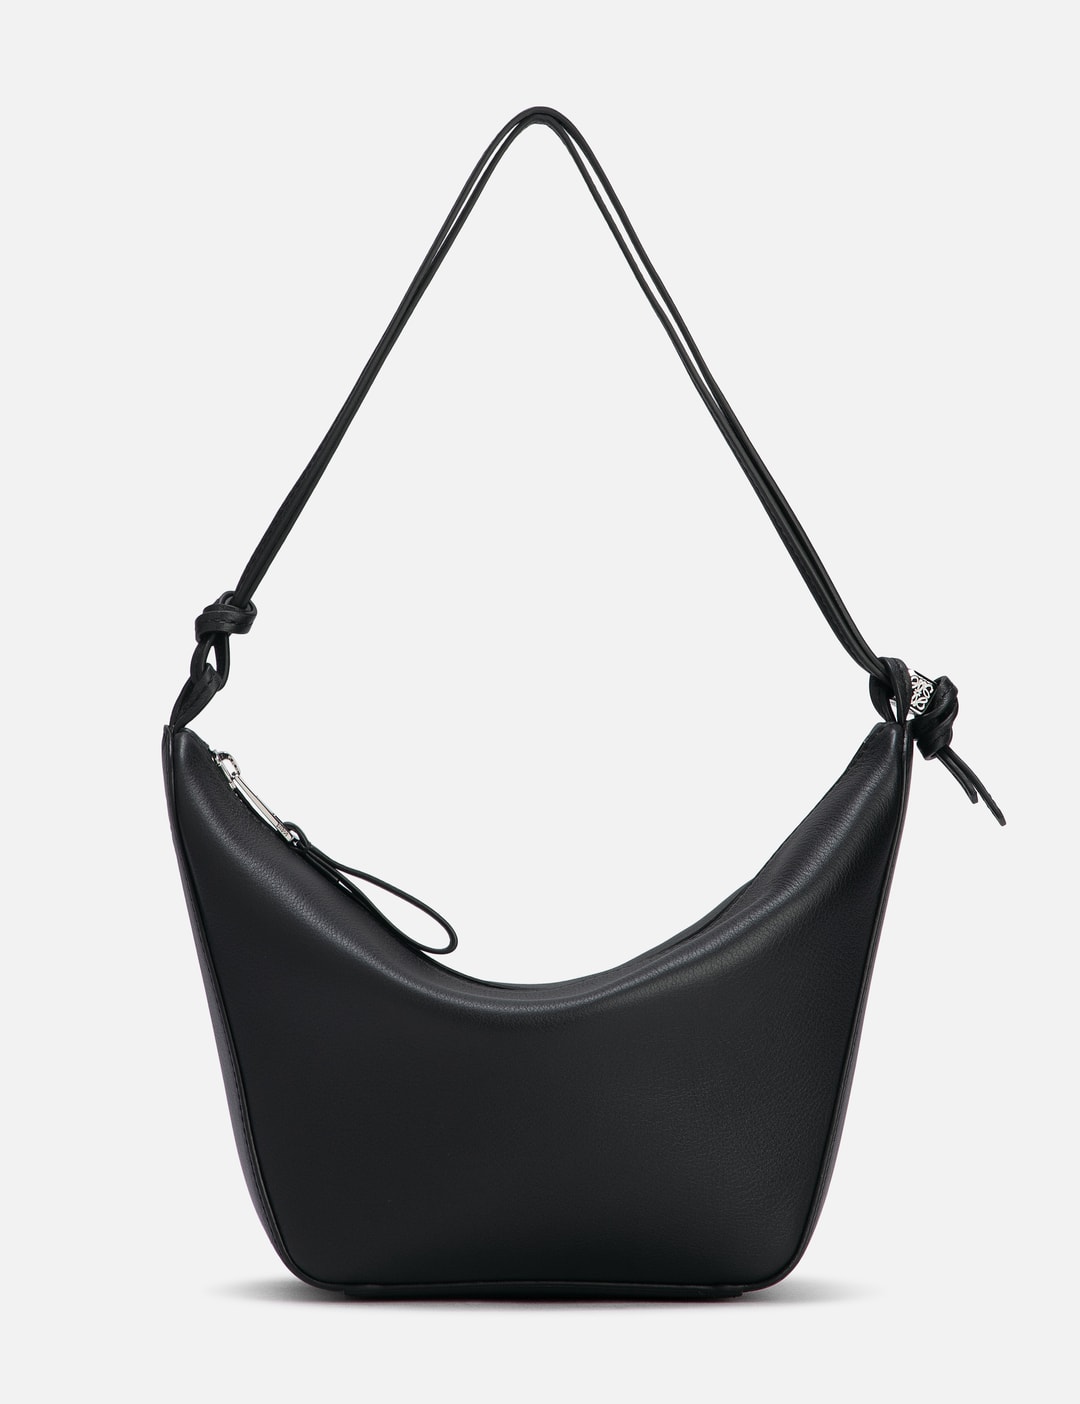 Loewe - Small Horseshoe Bag  HBX - Globally Curated Fashion and